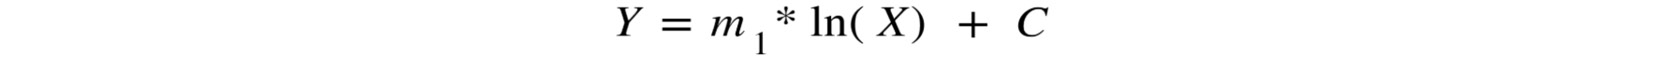 Figure 5.38: Logarithmic trend line formula
